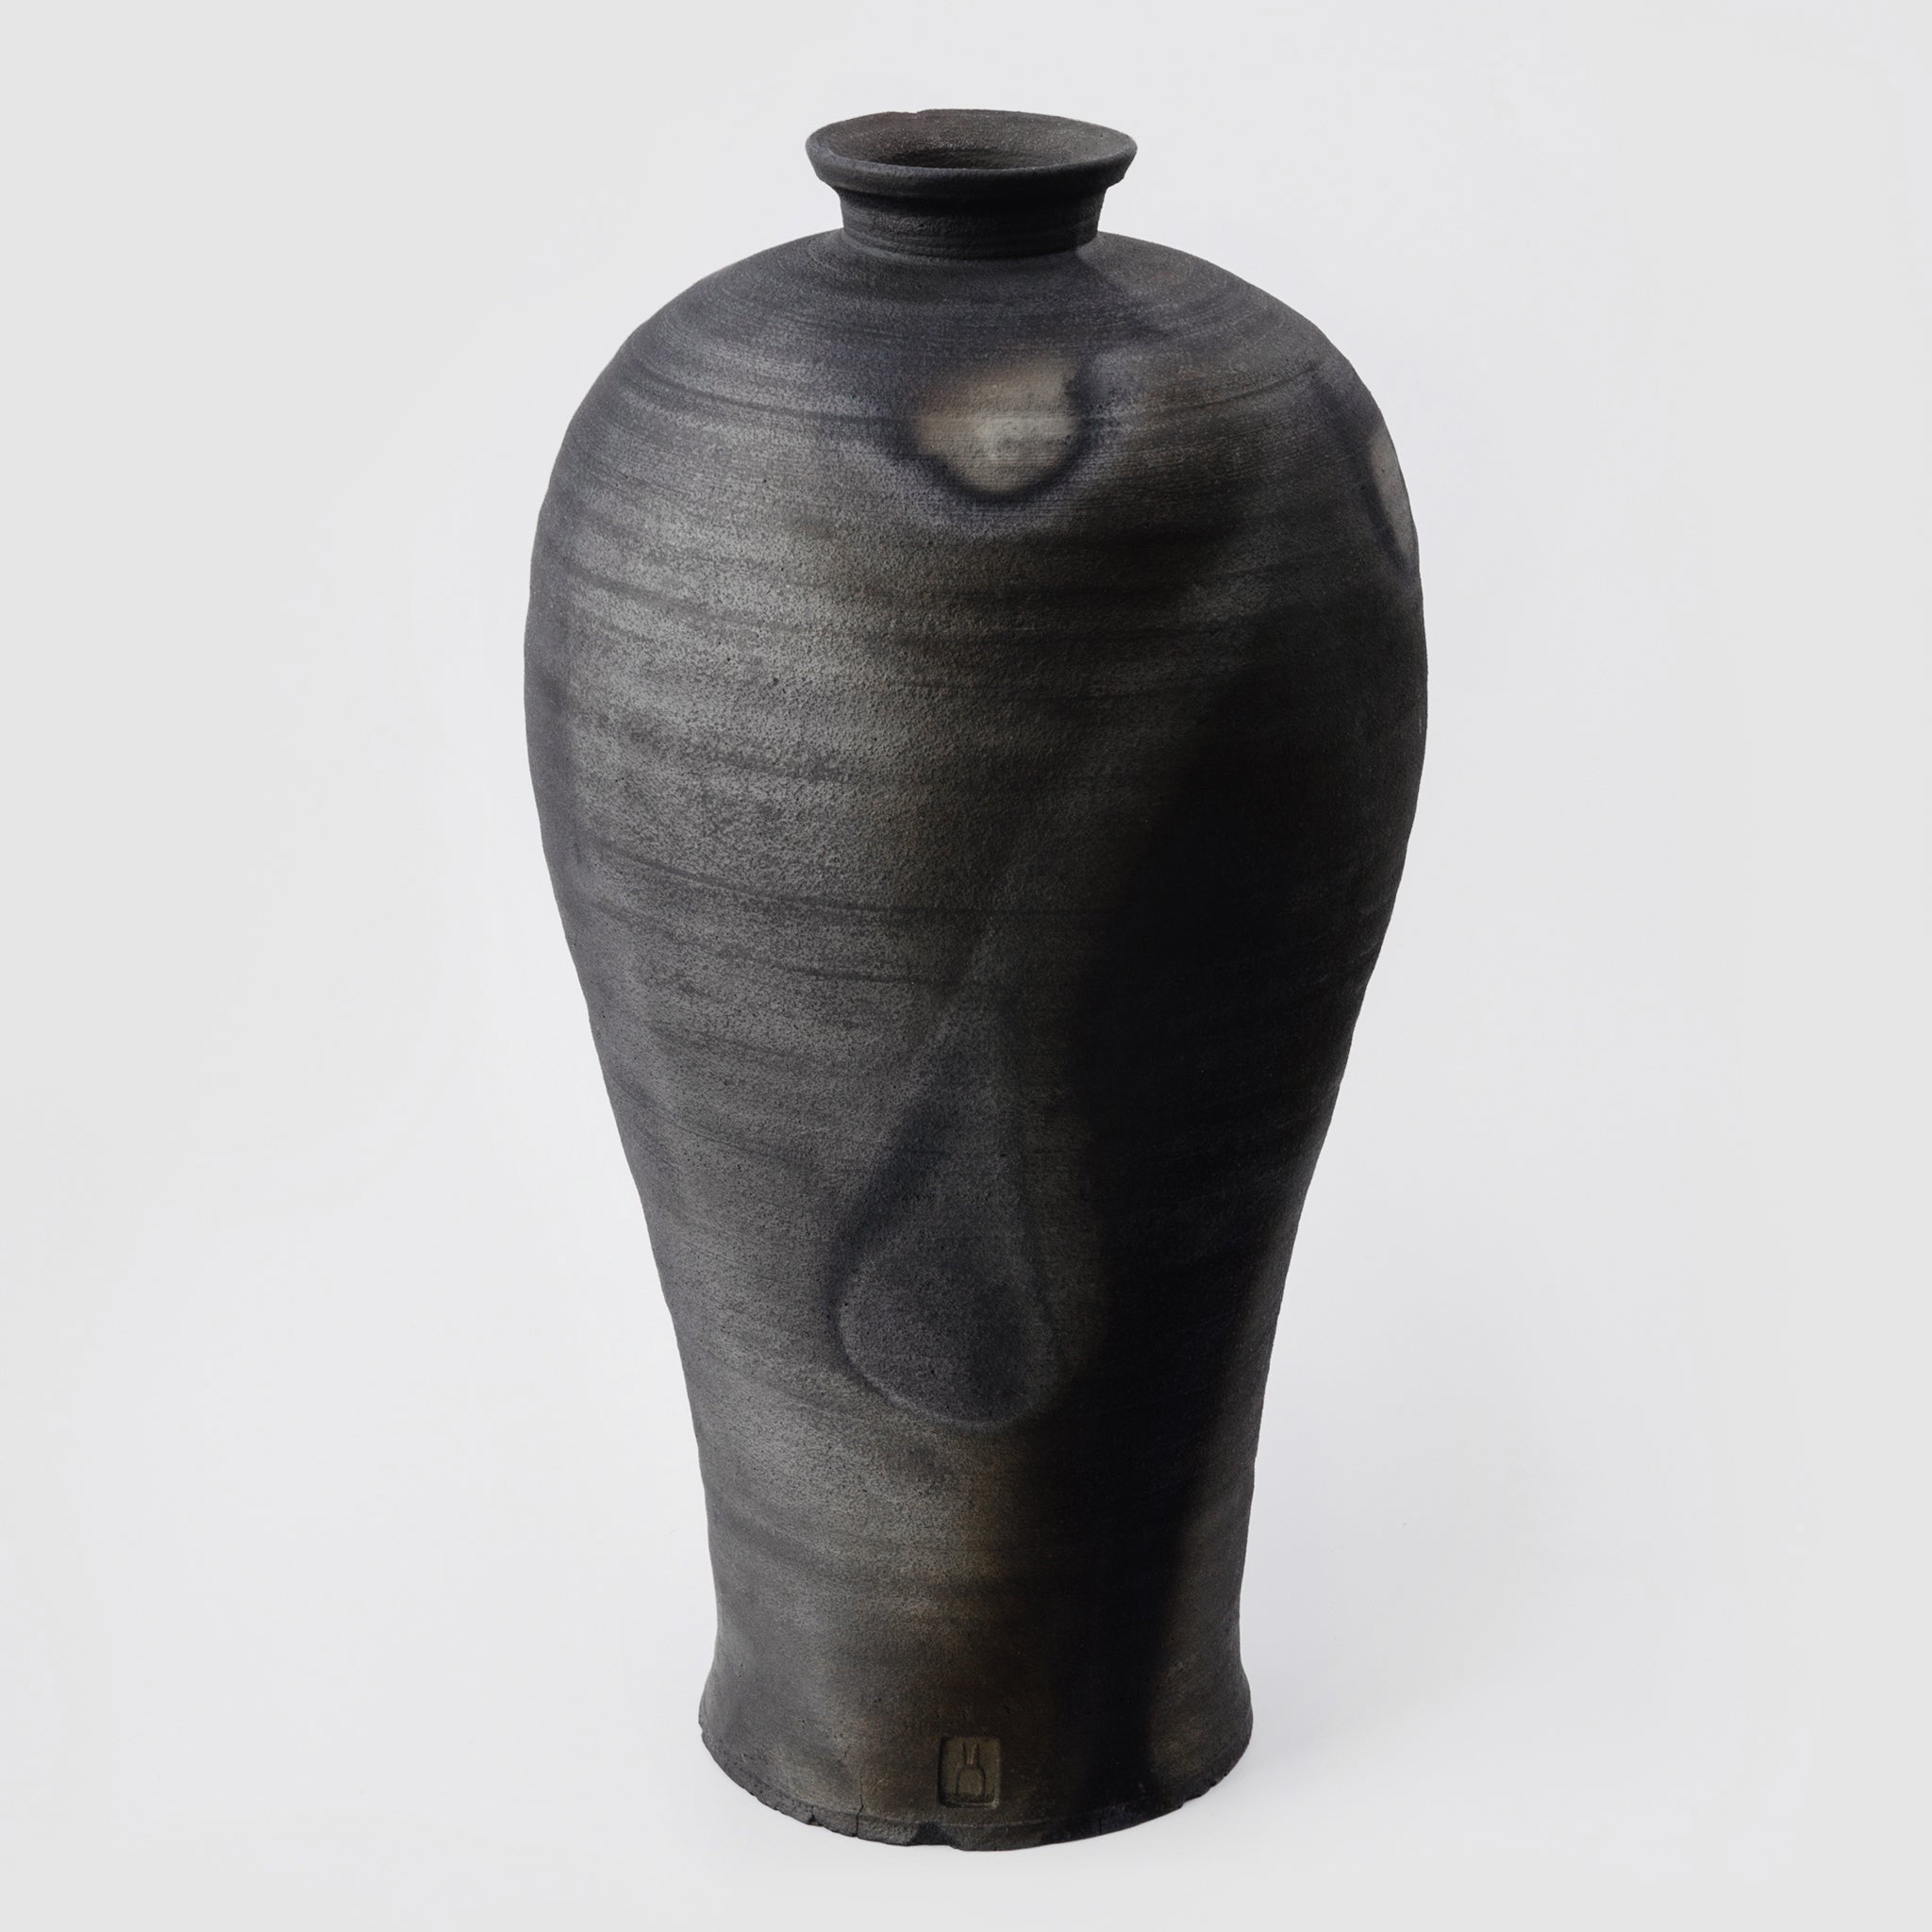 Black Vase No.146/23